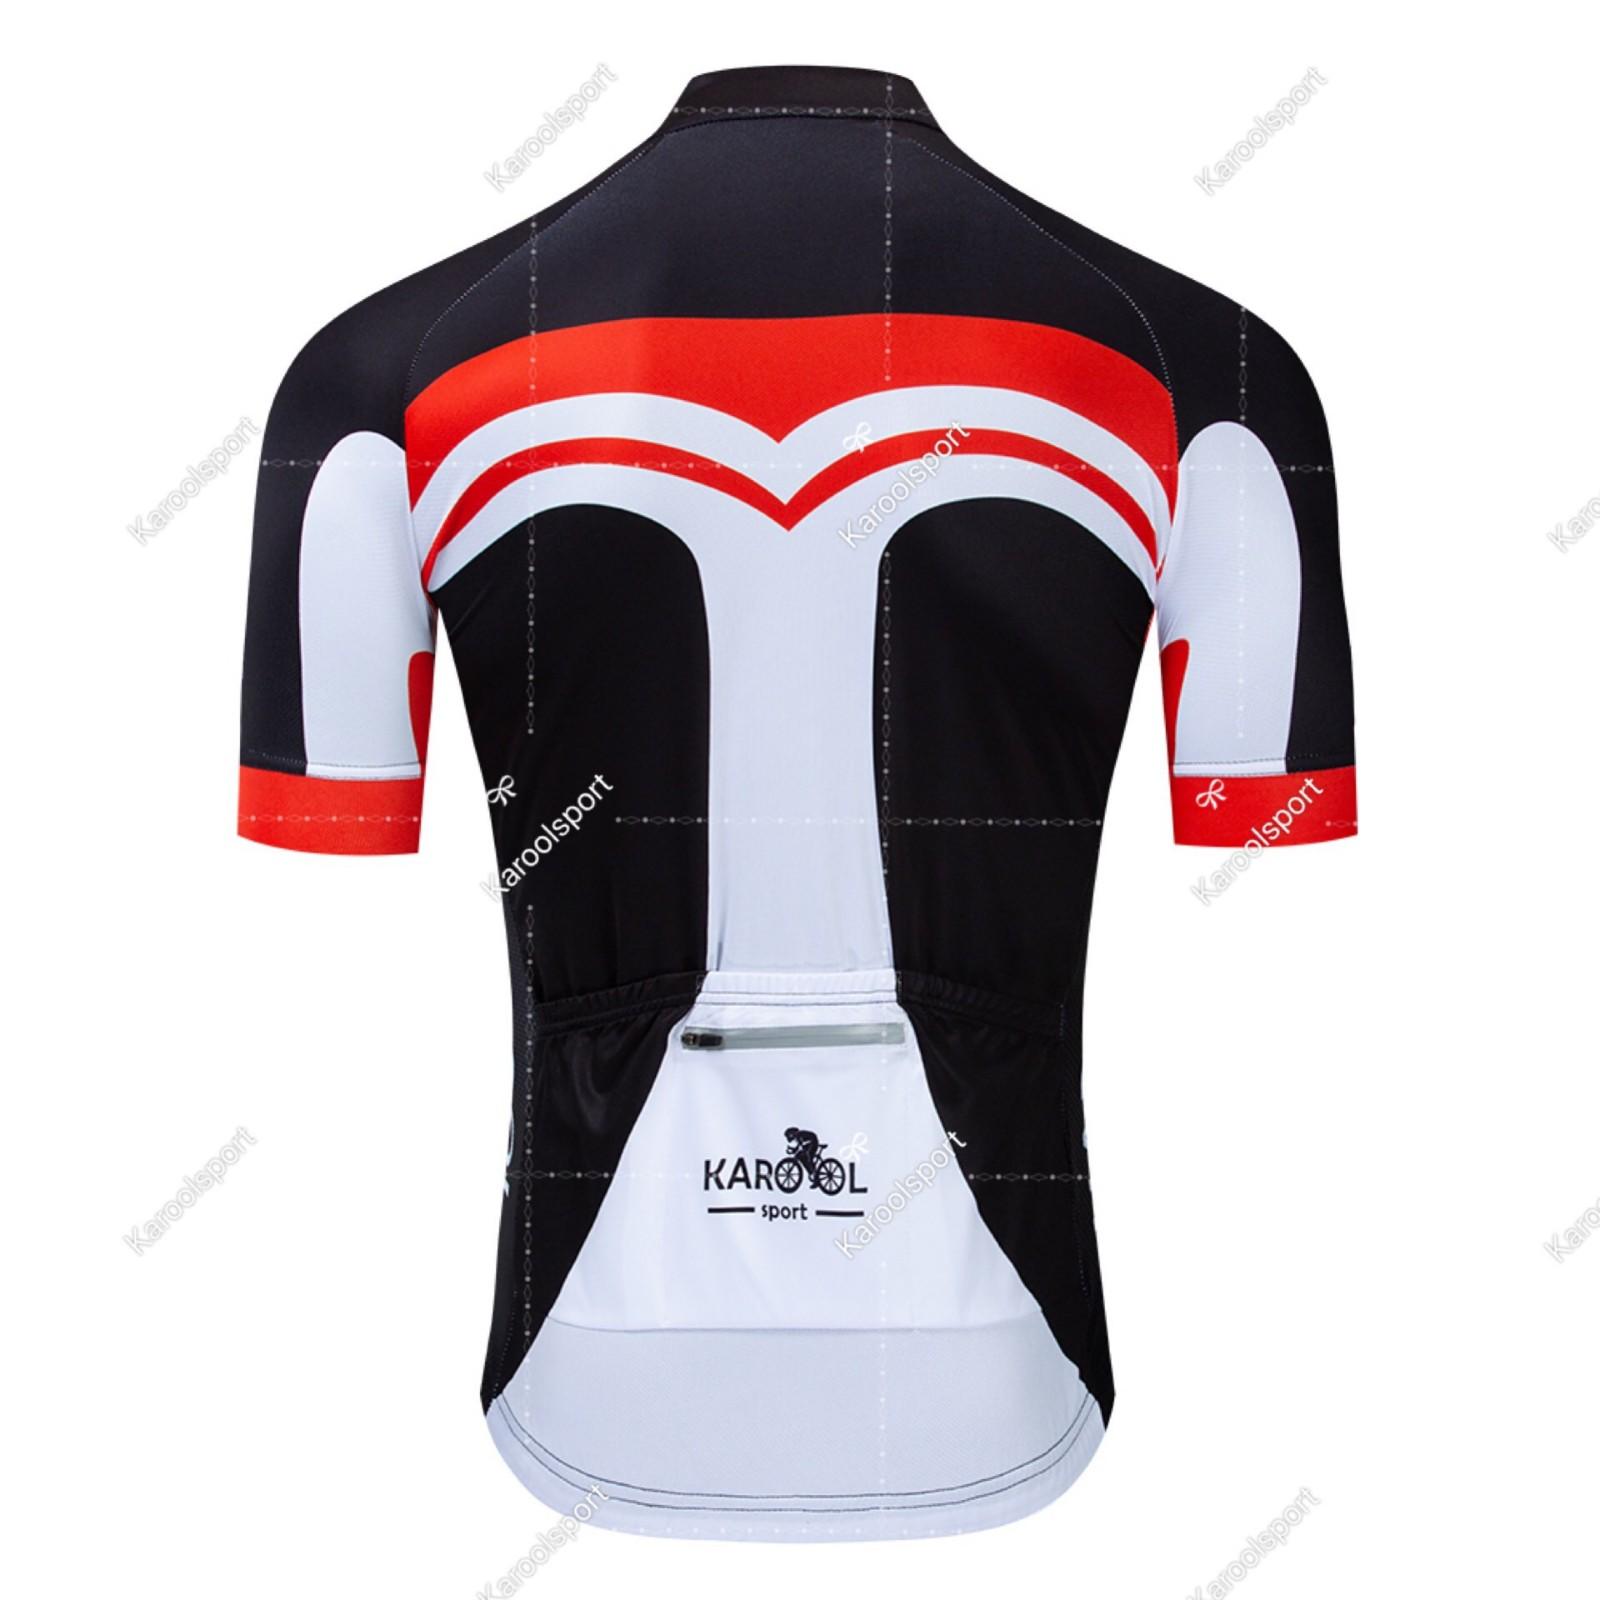 Karool custom bike jerseys customized for sporting-3